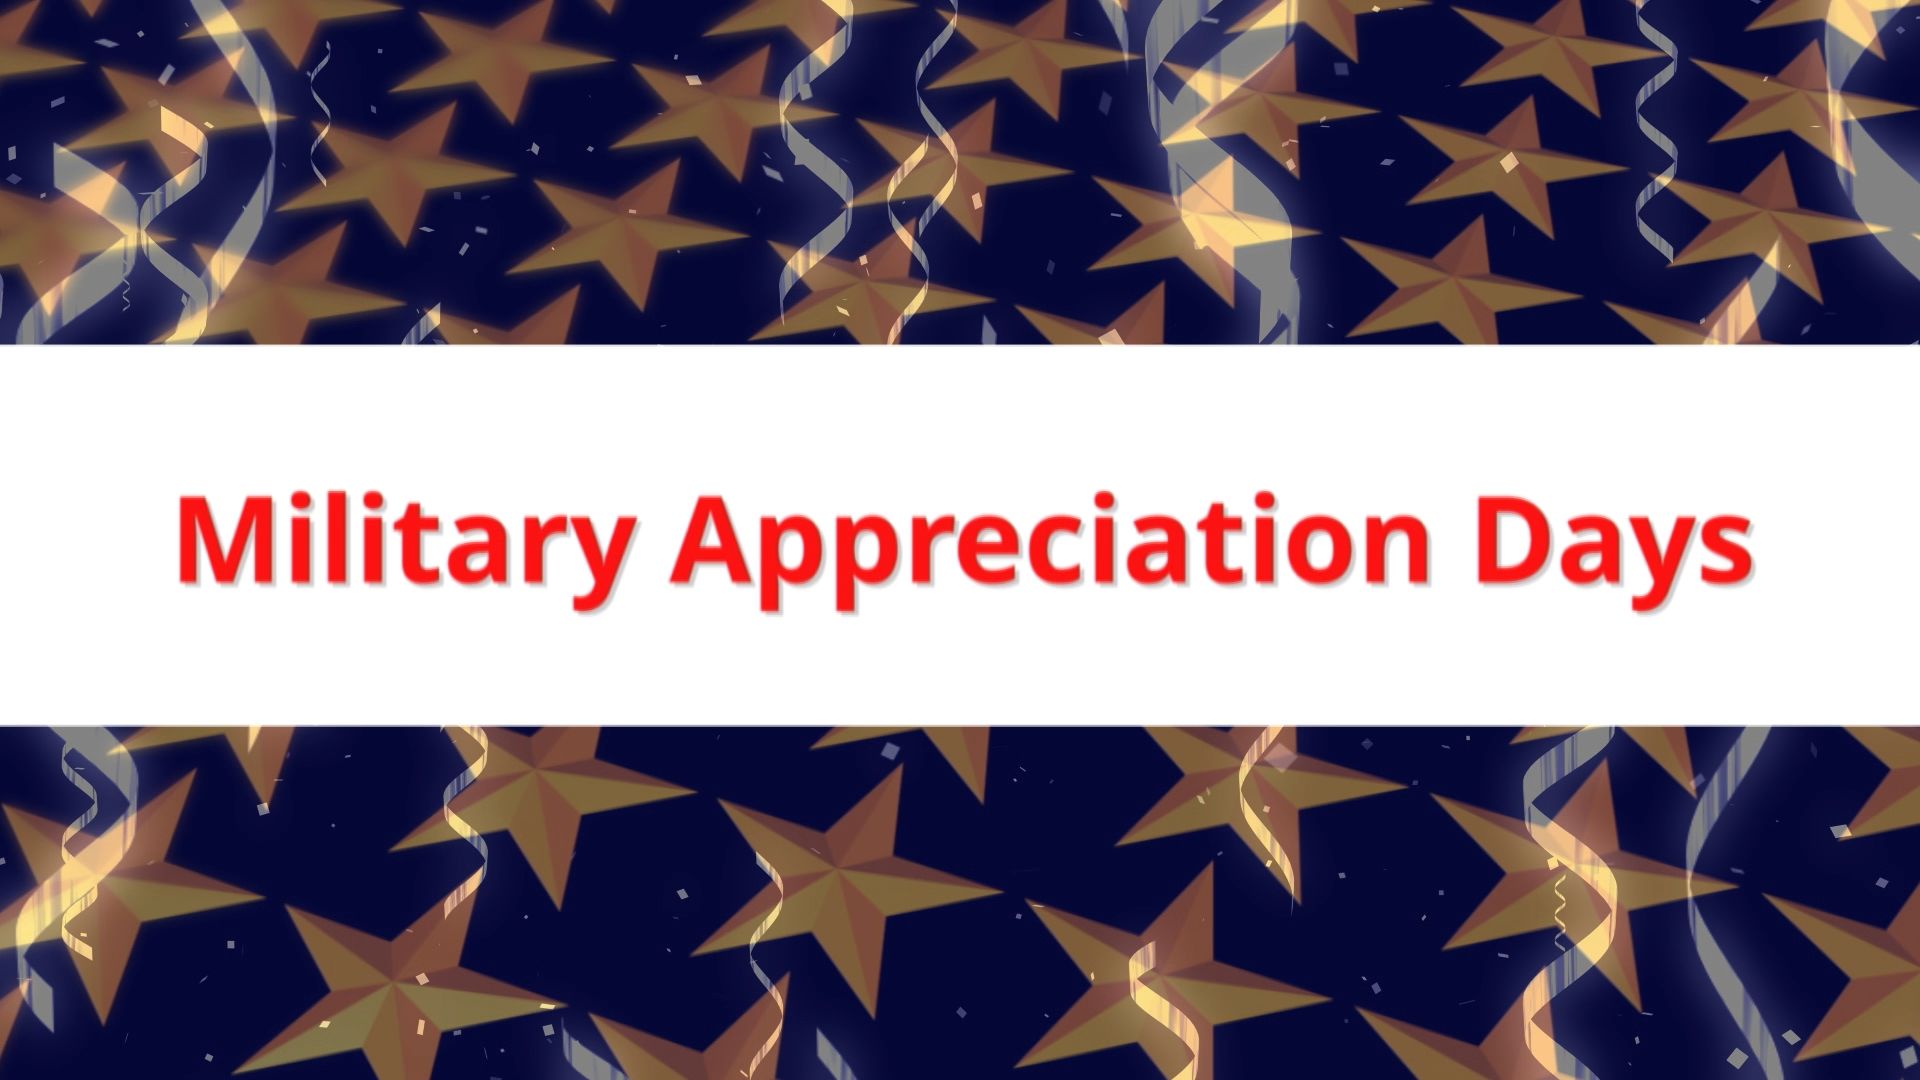 Military Appreciation Days May 2016